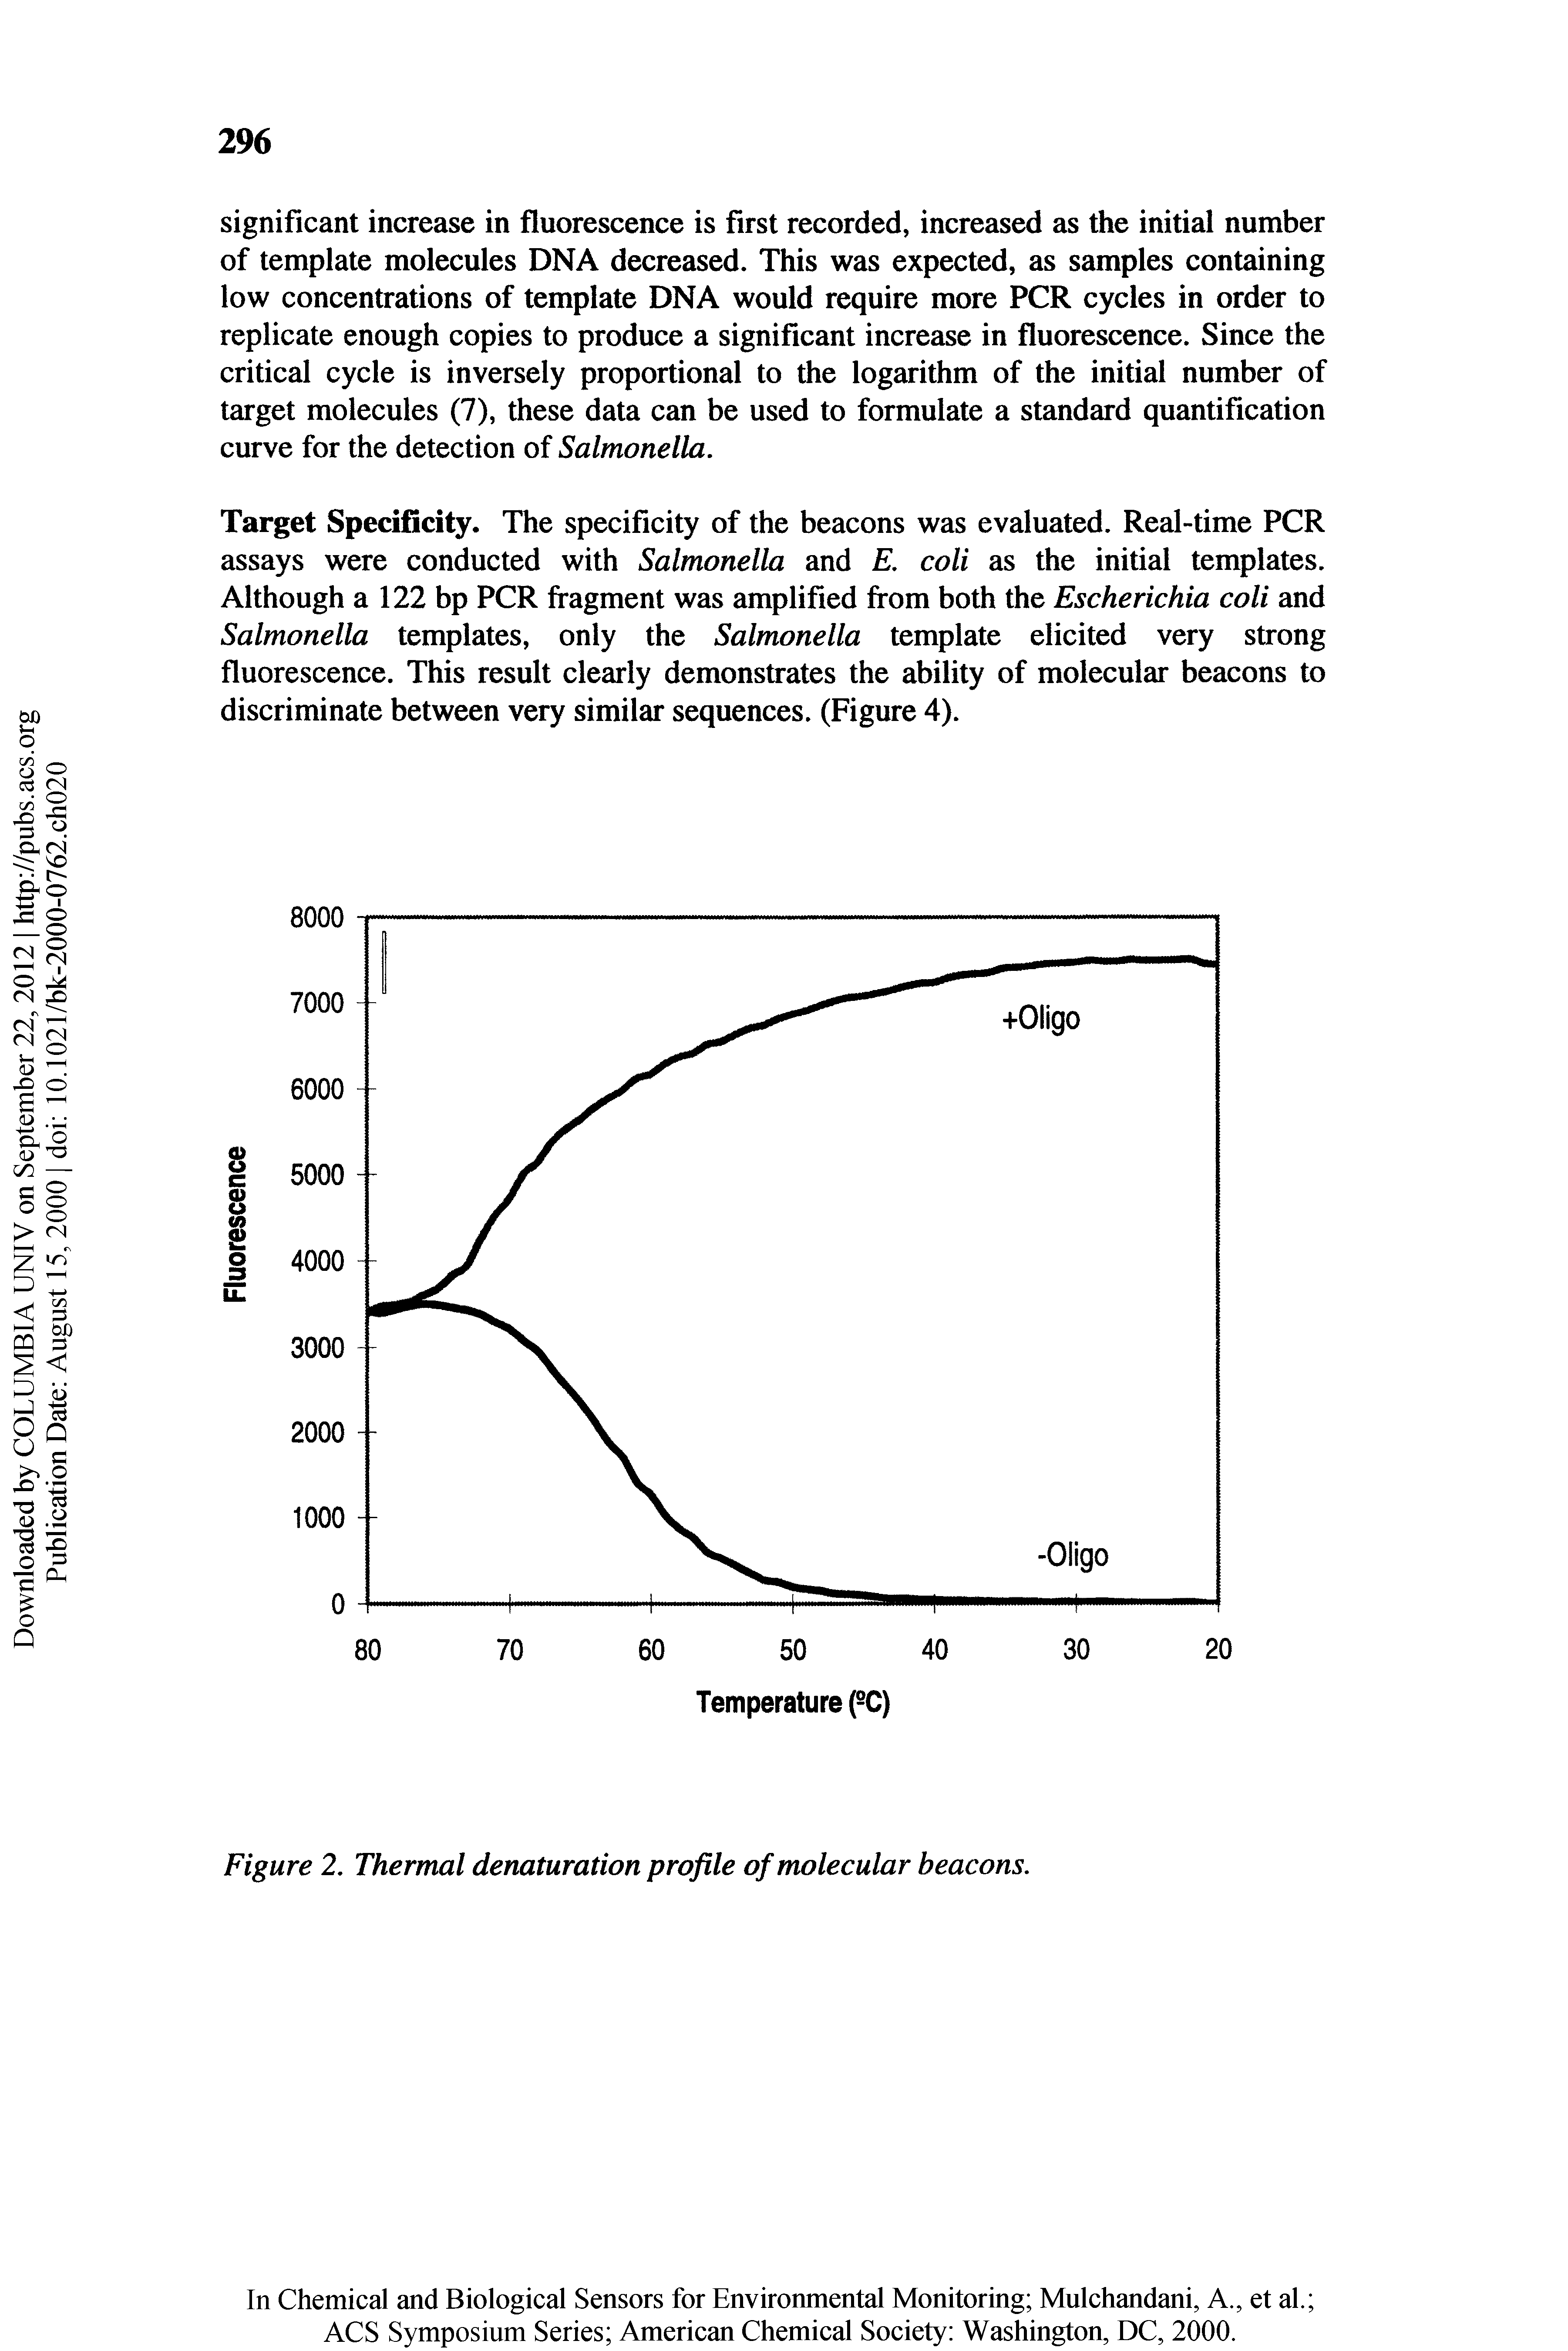 Figure 2. Thermal denaturation profile of molecular beacons.